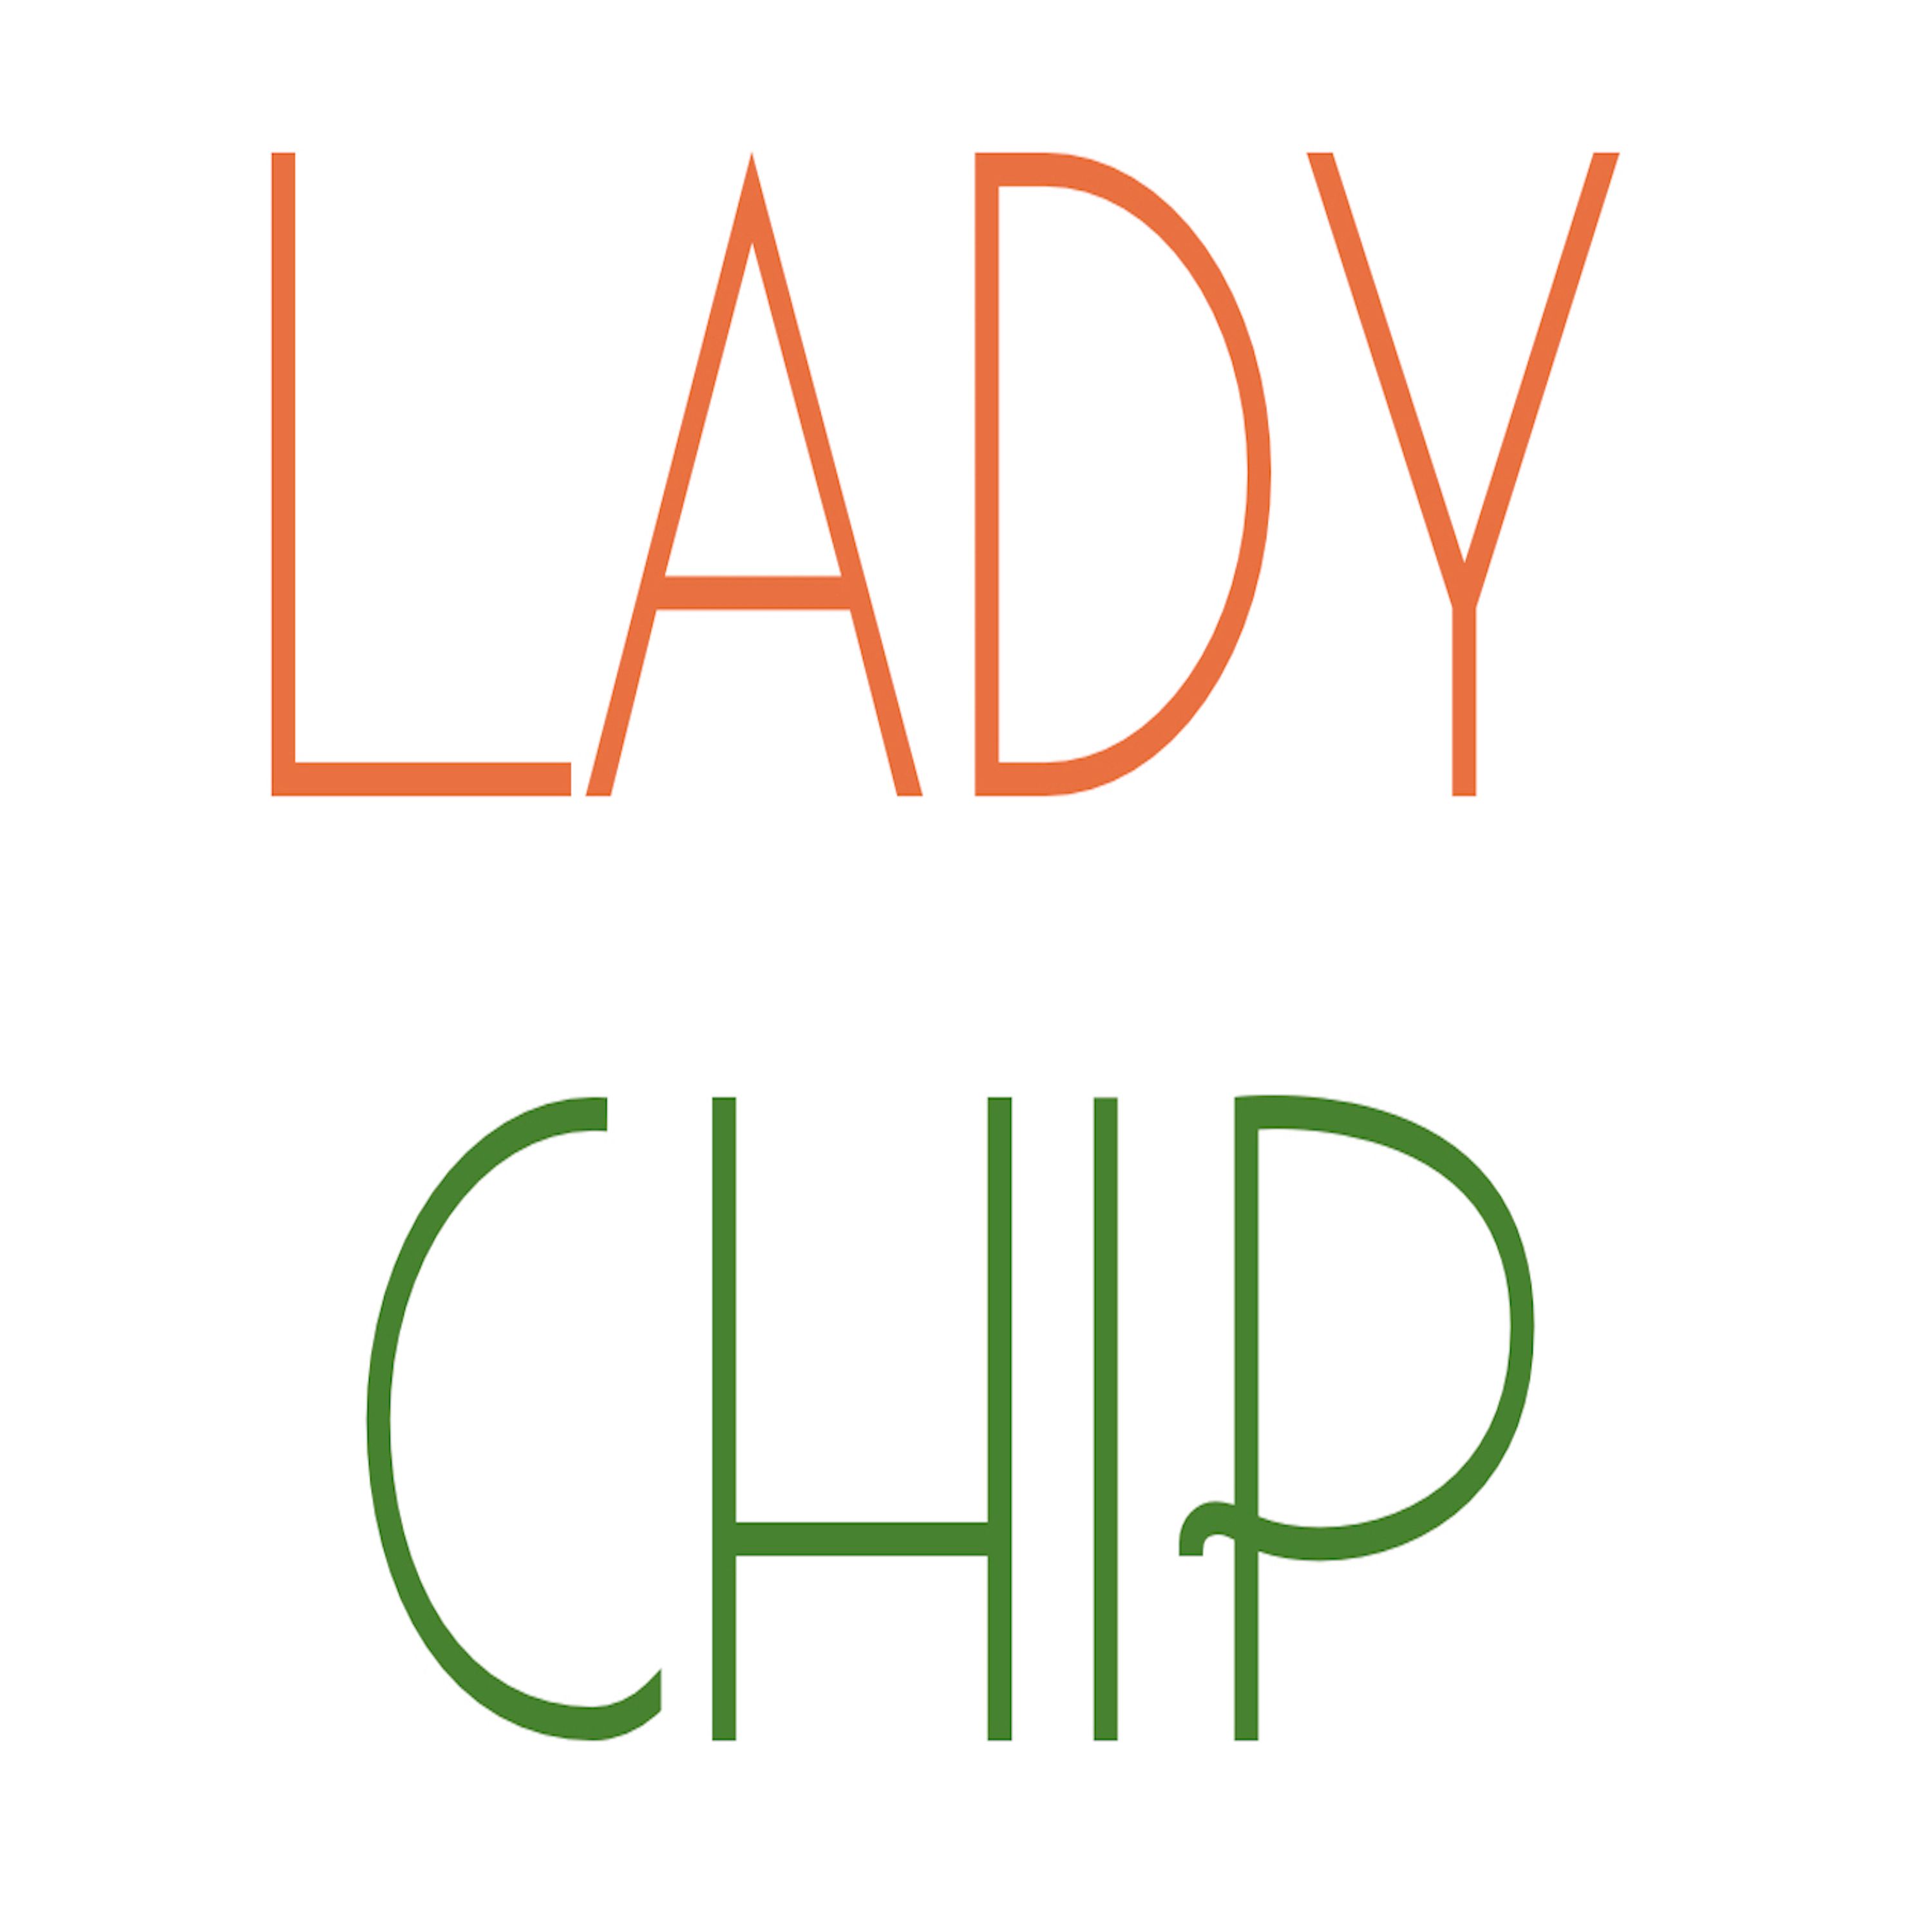 Lady Chip